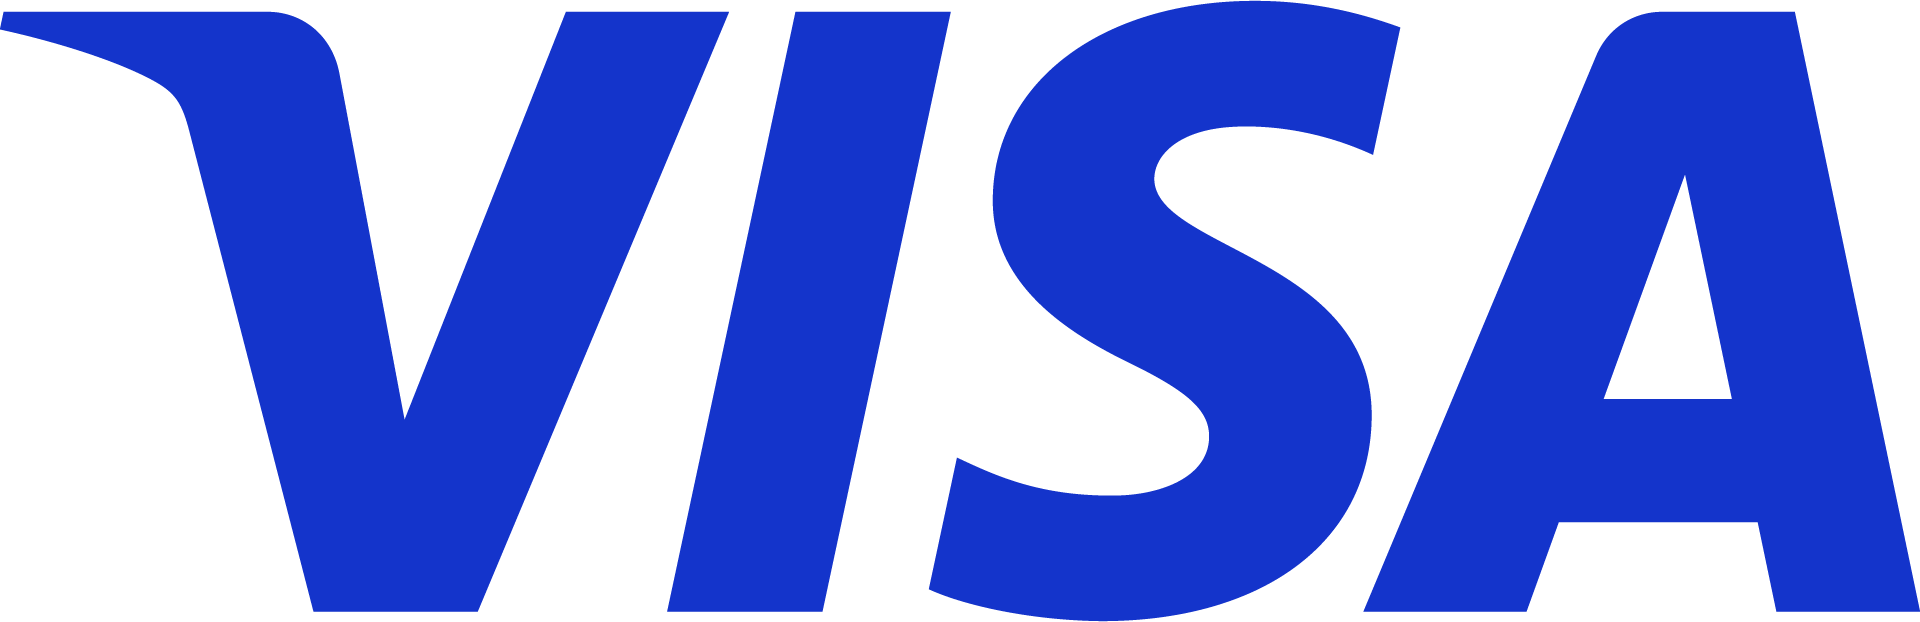 Logo_Visa_Brandmark_2021.png